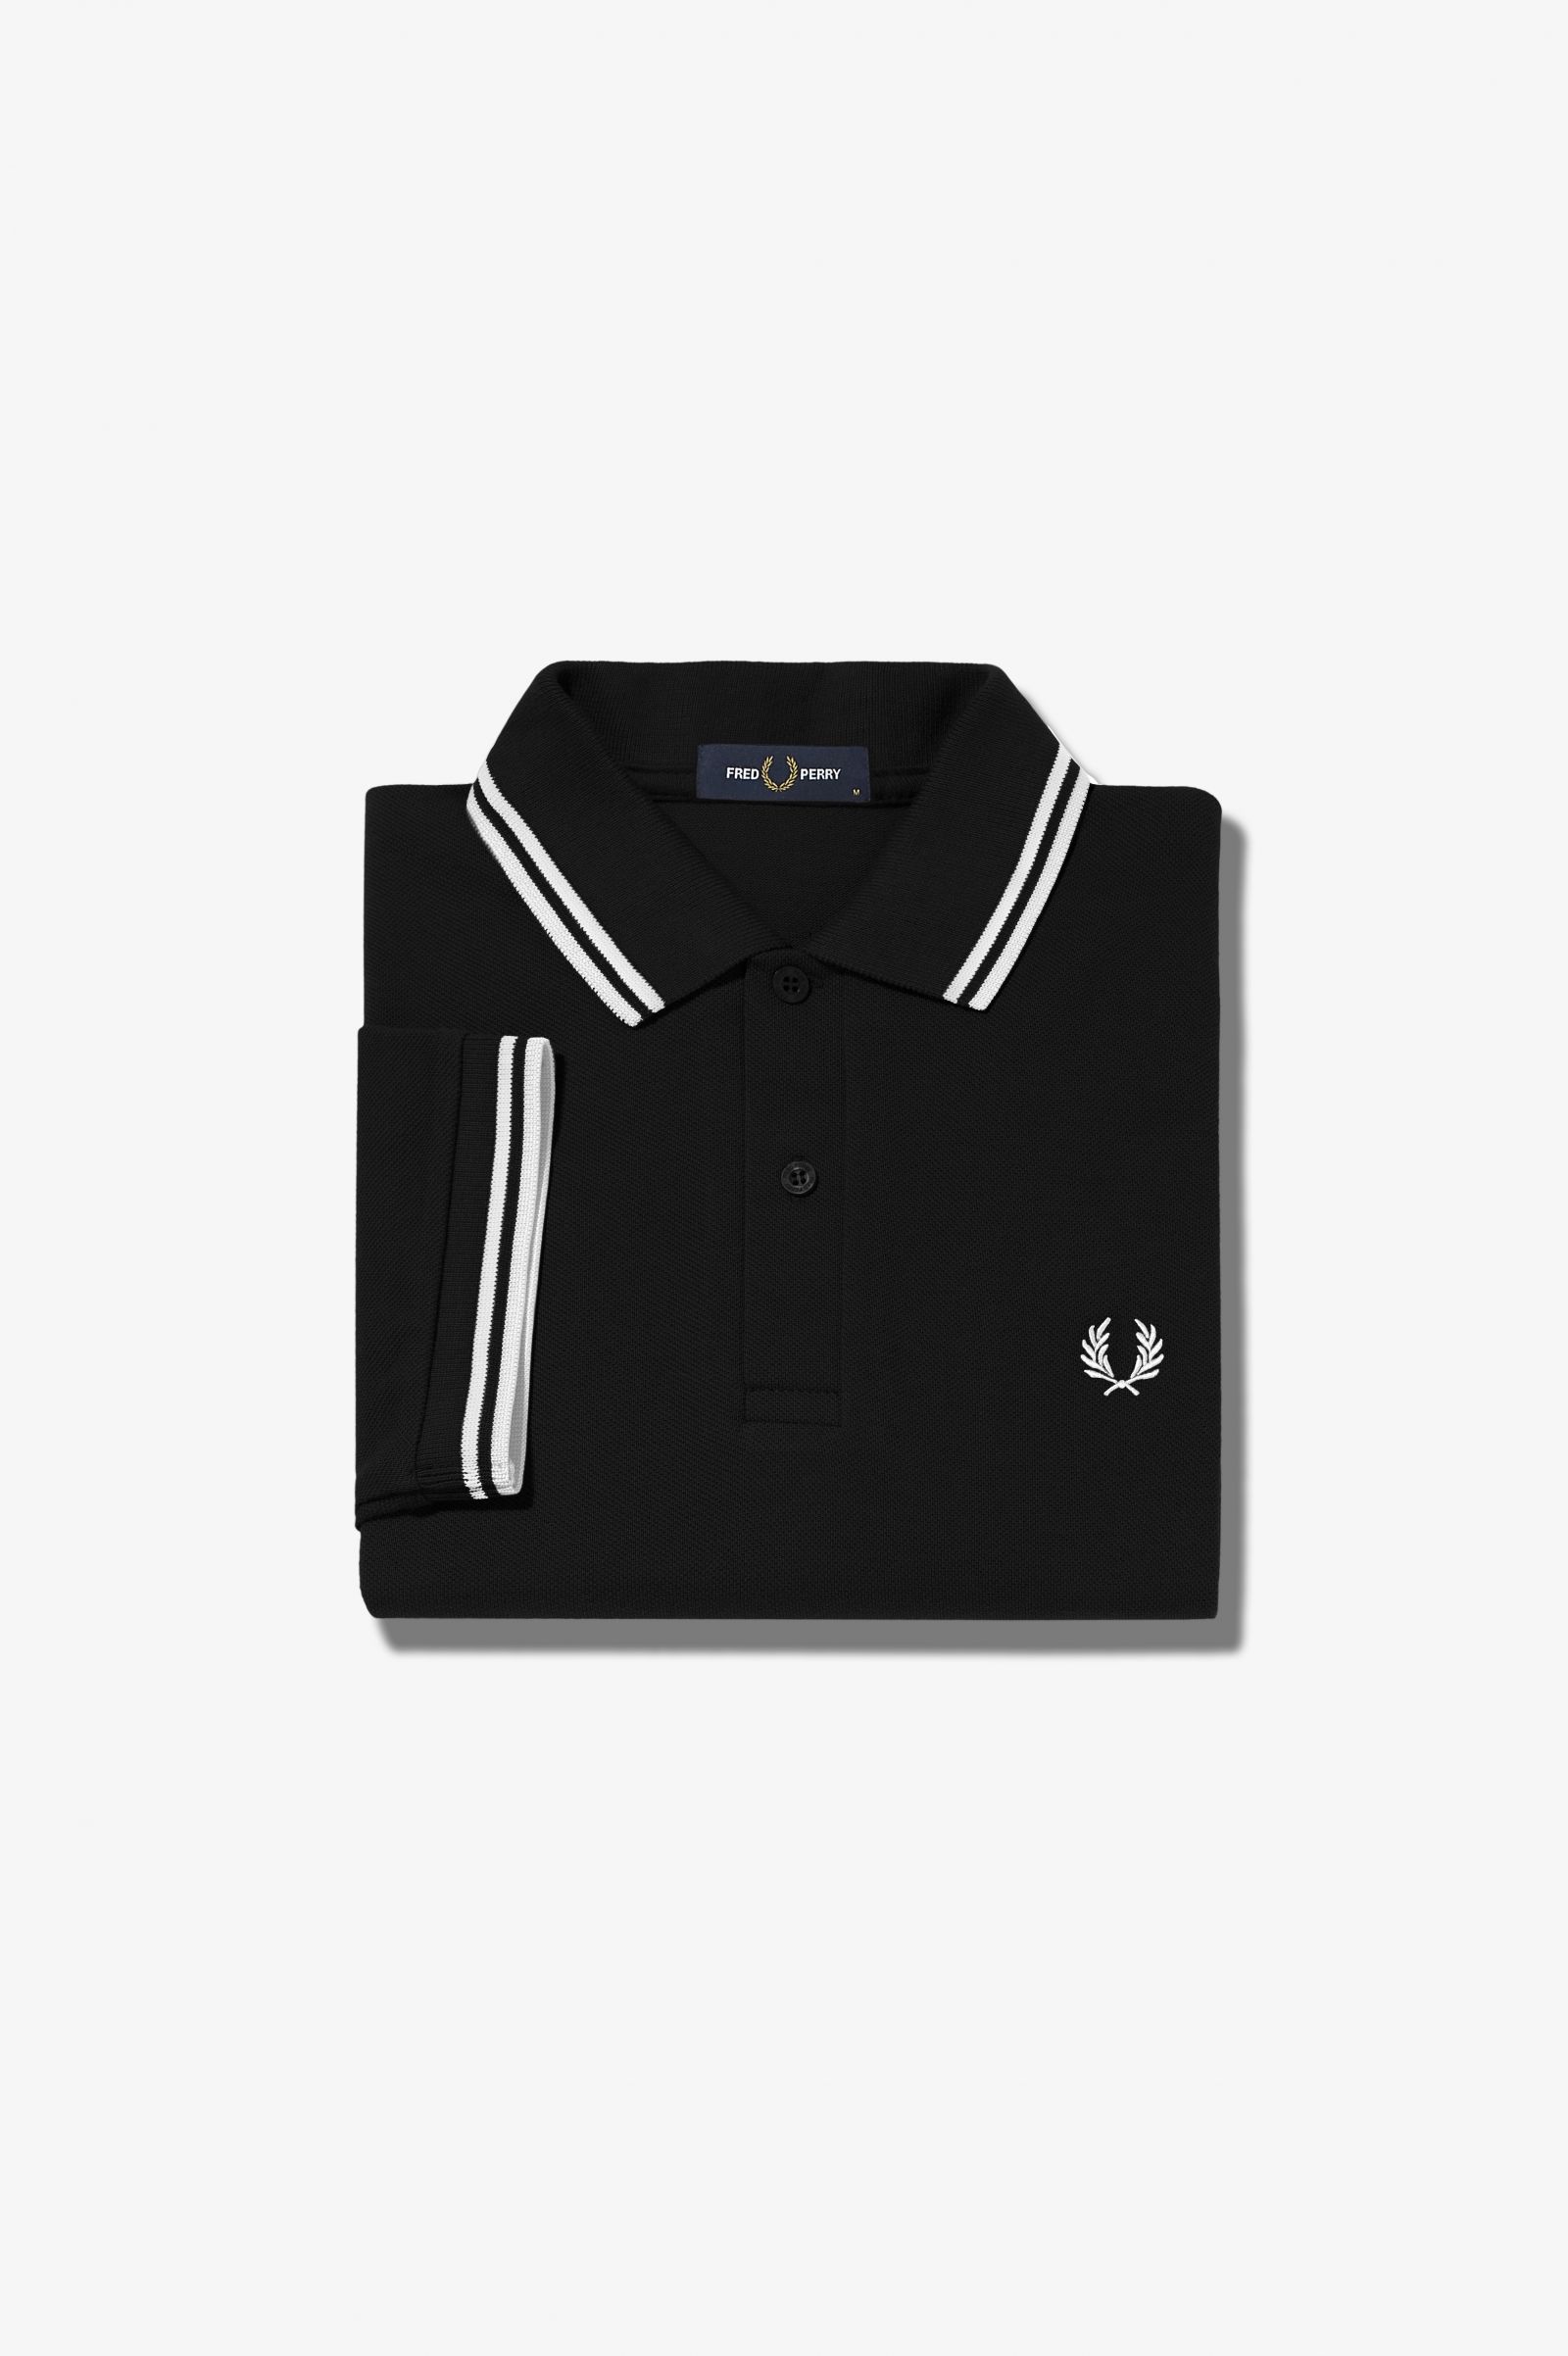 M3600 - Black / White / White | The Fred Perry Shirt | Men's Short